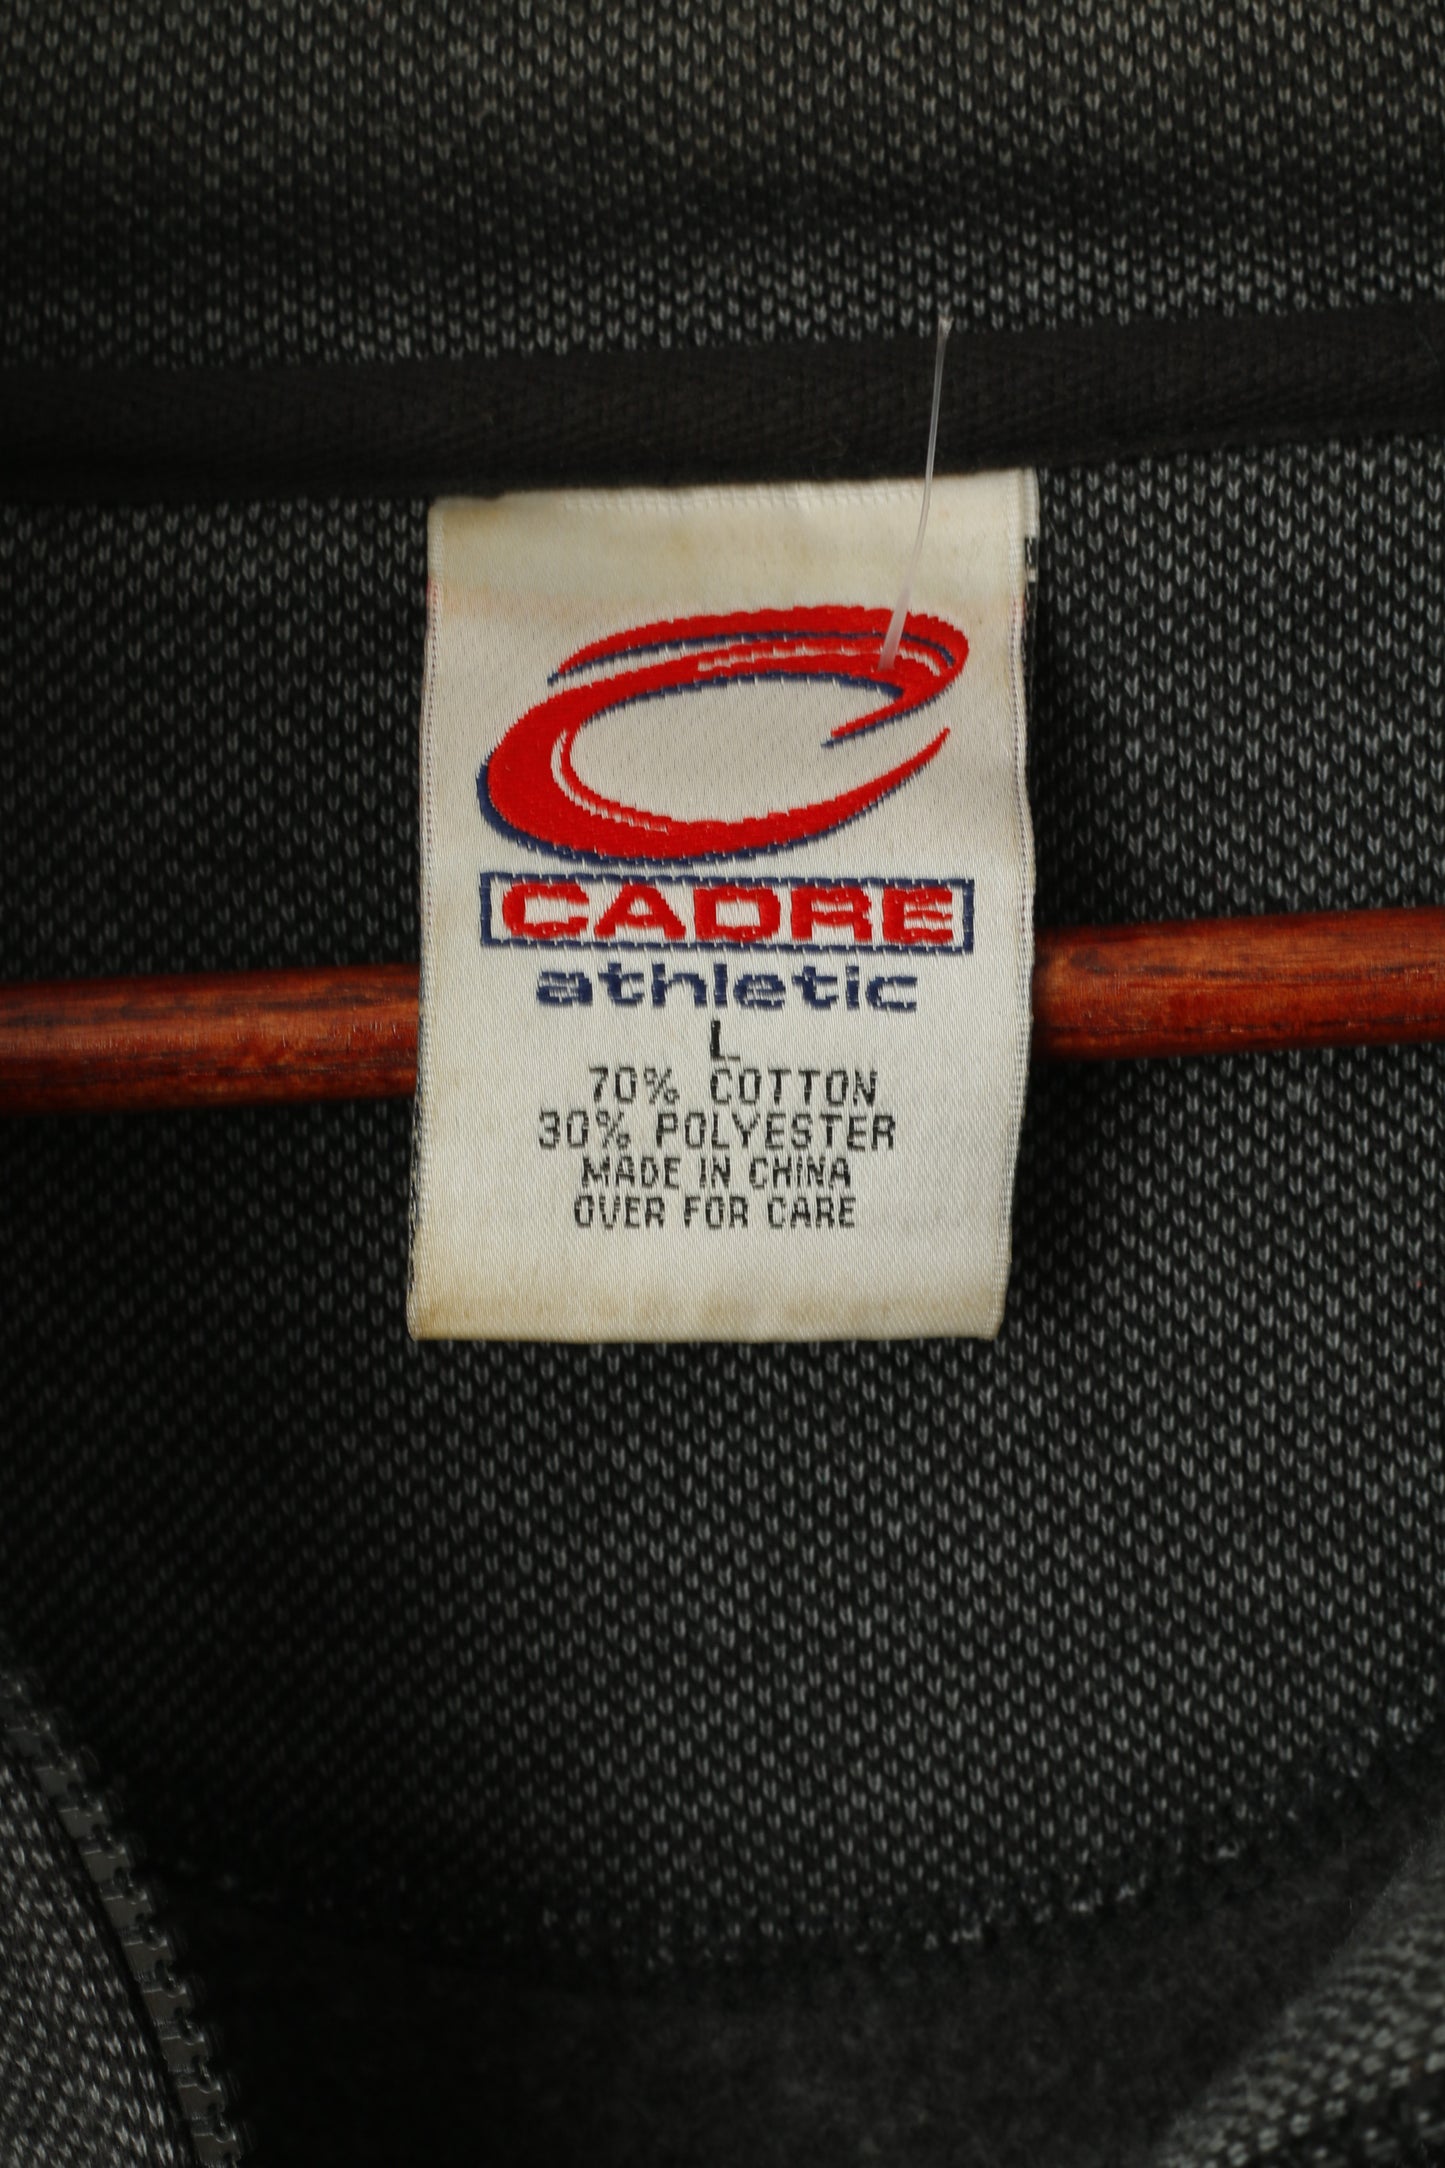 Cadre Athetlic Men L (XXL) Sweatshirt Grey Vintage Bobby Labonte Cotton Zip Neck Top